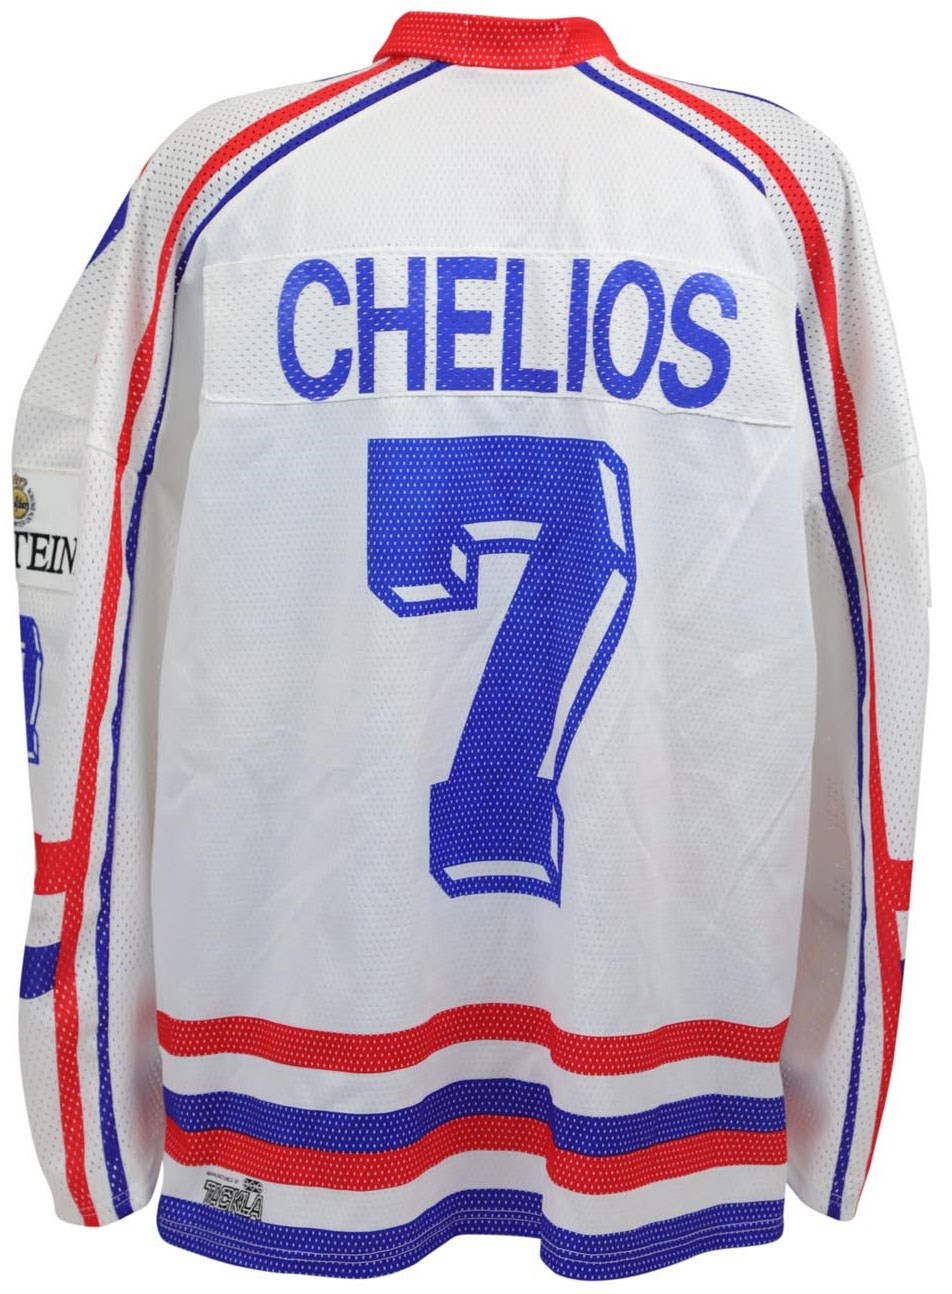 - 1994 Chris Chelios World Ice Hockey Championships Game Worn Jersey